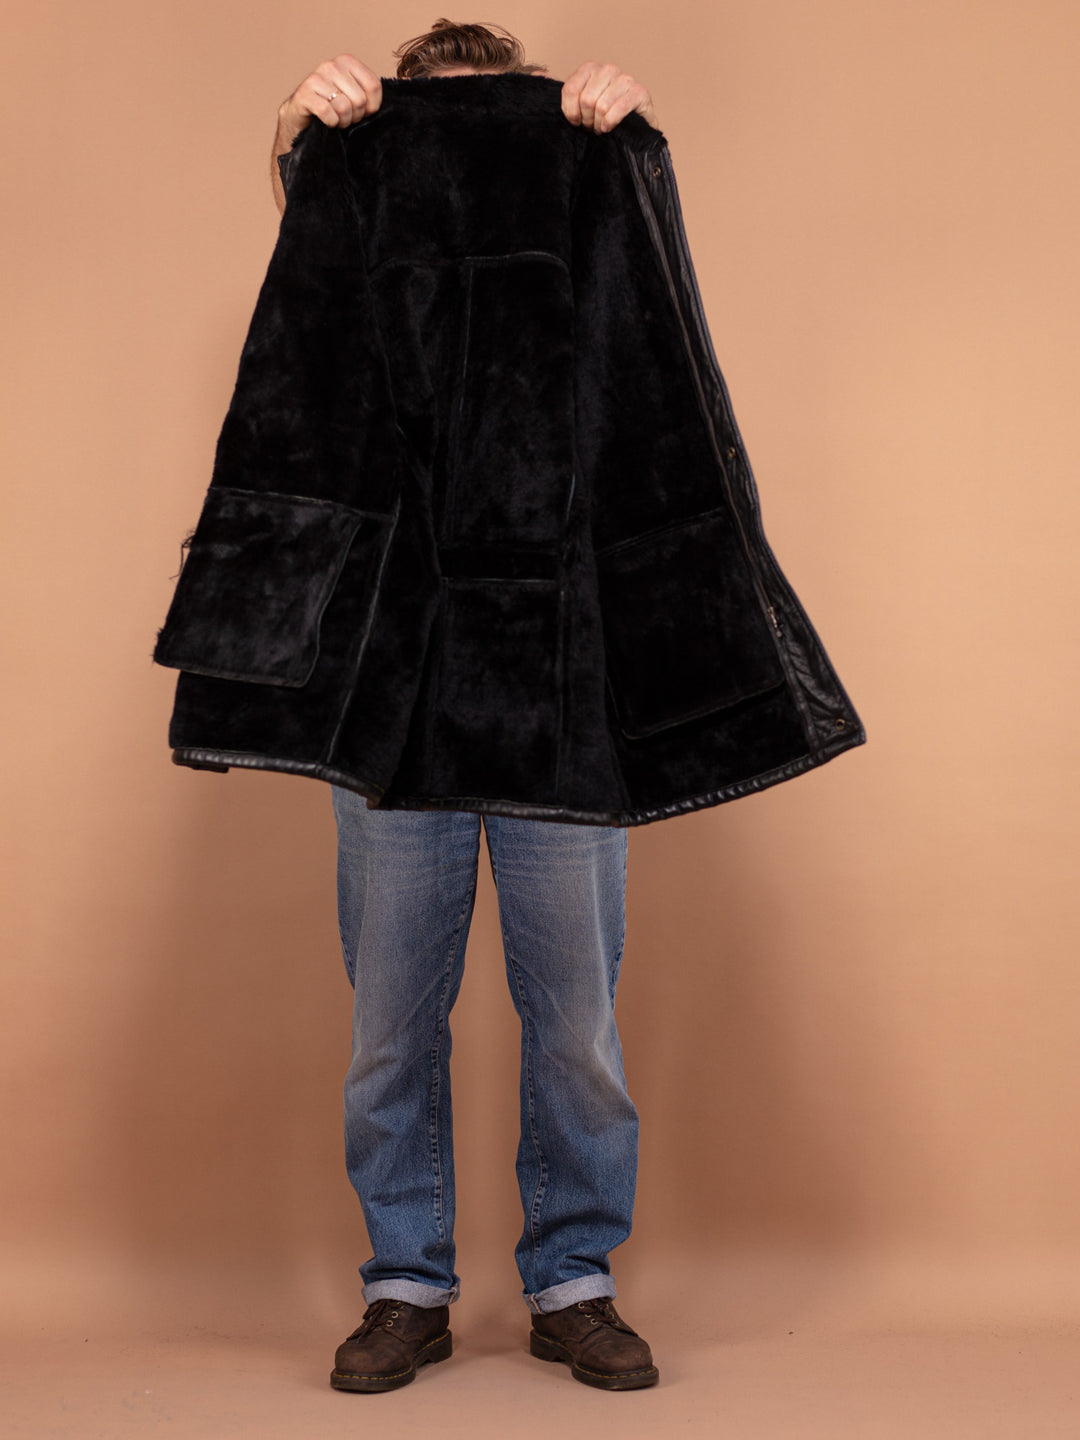 Black Leather Sherpa Coat 90's, Size M Vintage Men Leather Coat, Retro Leather Winter Coat, Gift for Men, Faux Sheepskin Coat, Pre Loved